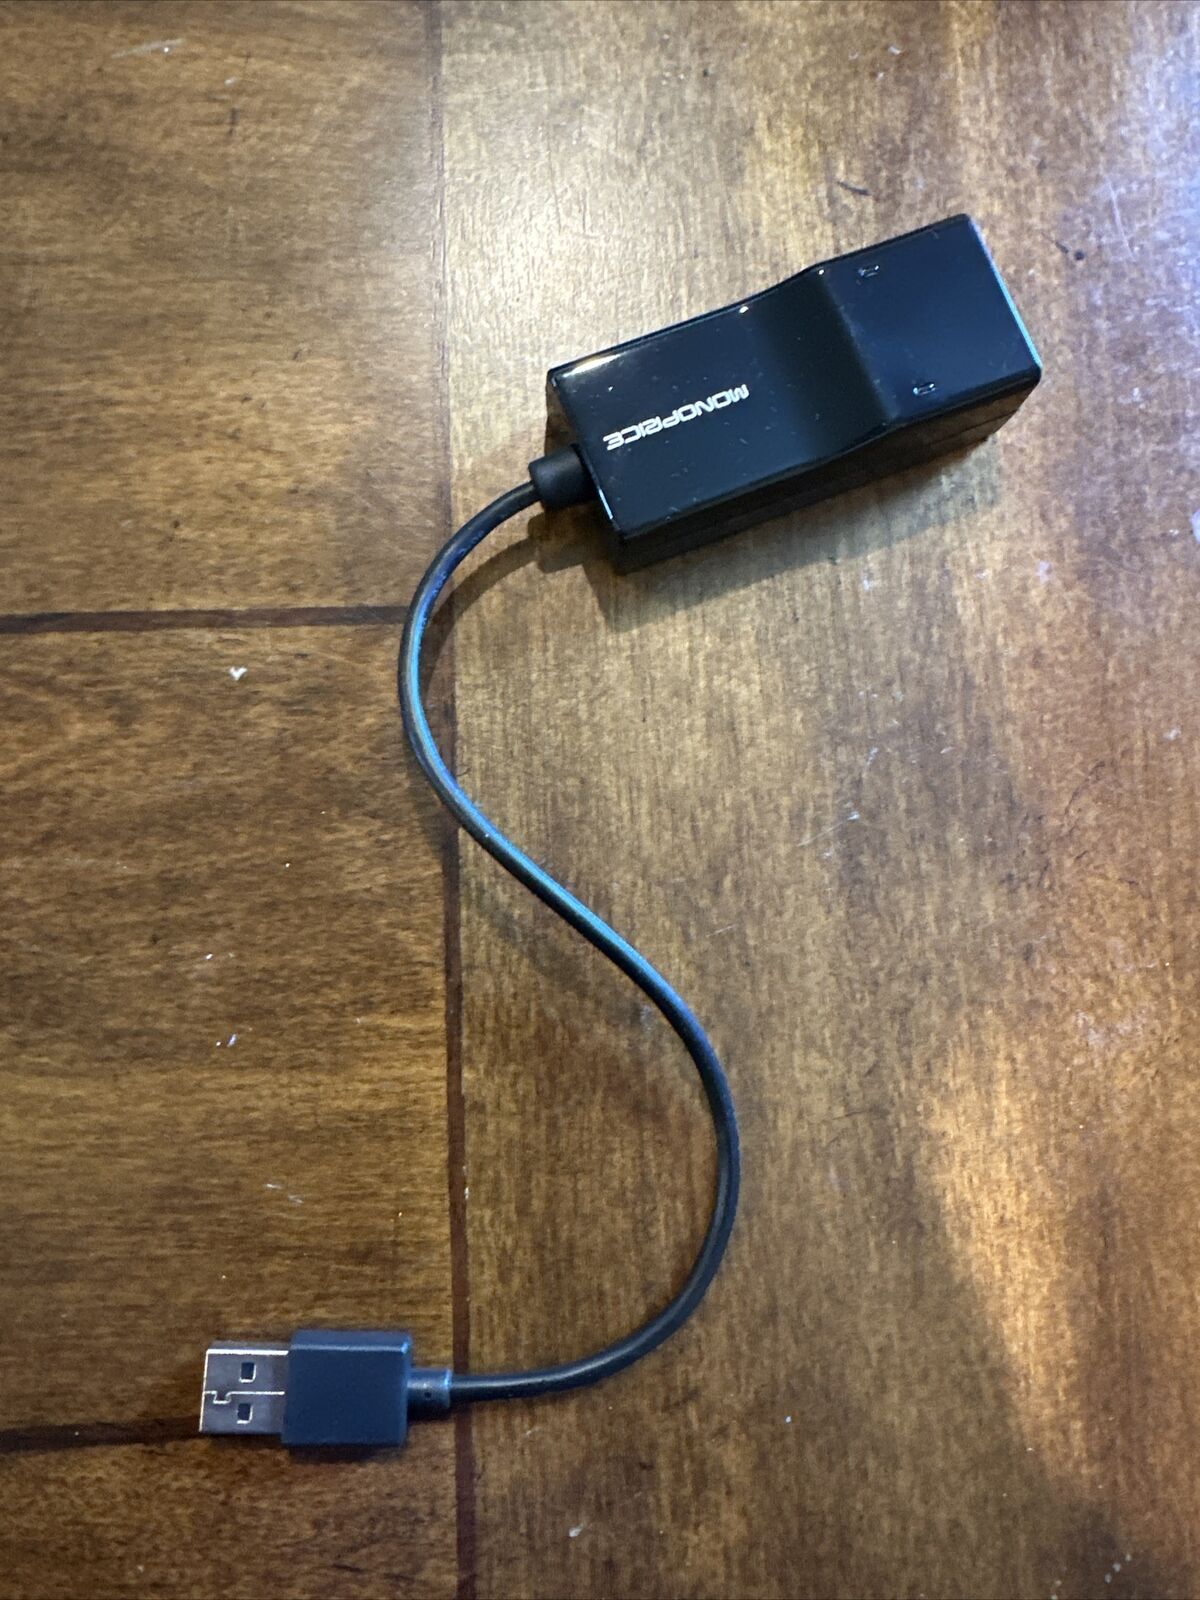 Monoprice USB 2.0 Gigabit Ethernet Adapter